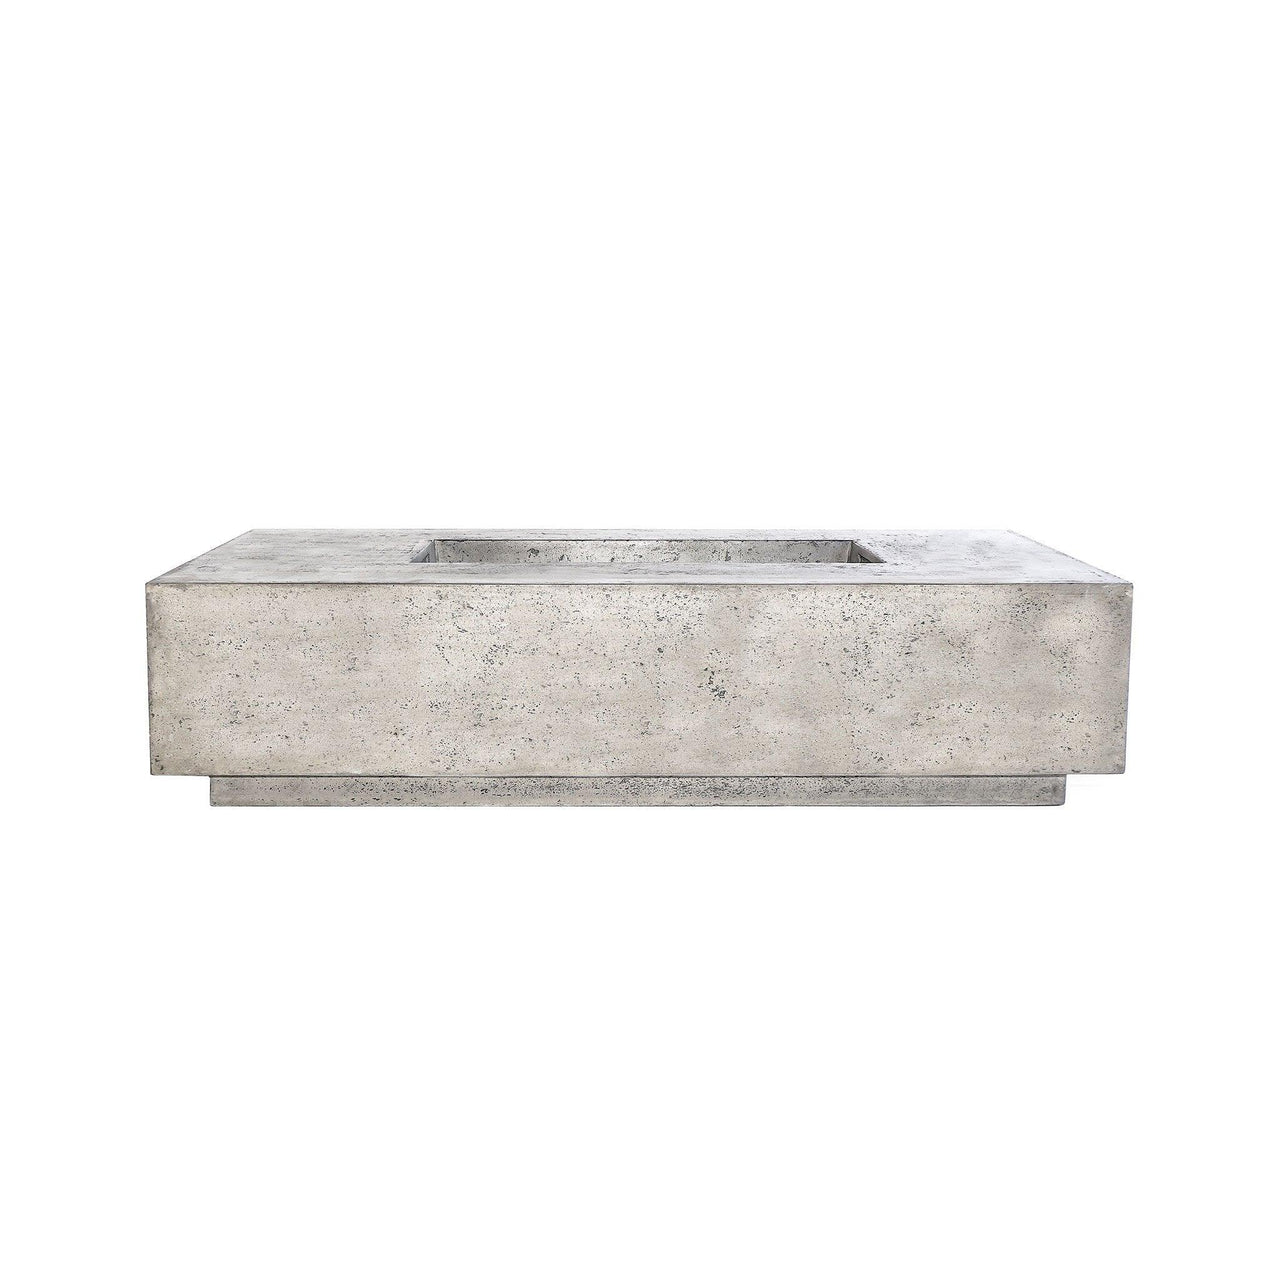 Prism Hardscapes - Tavola Series 4 Rectangular Concrete Fire Pit Table - Fire Pit Stock